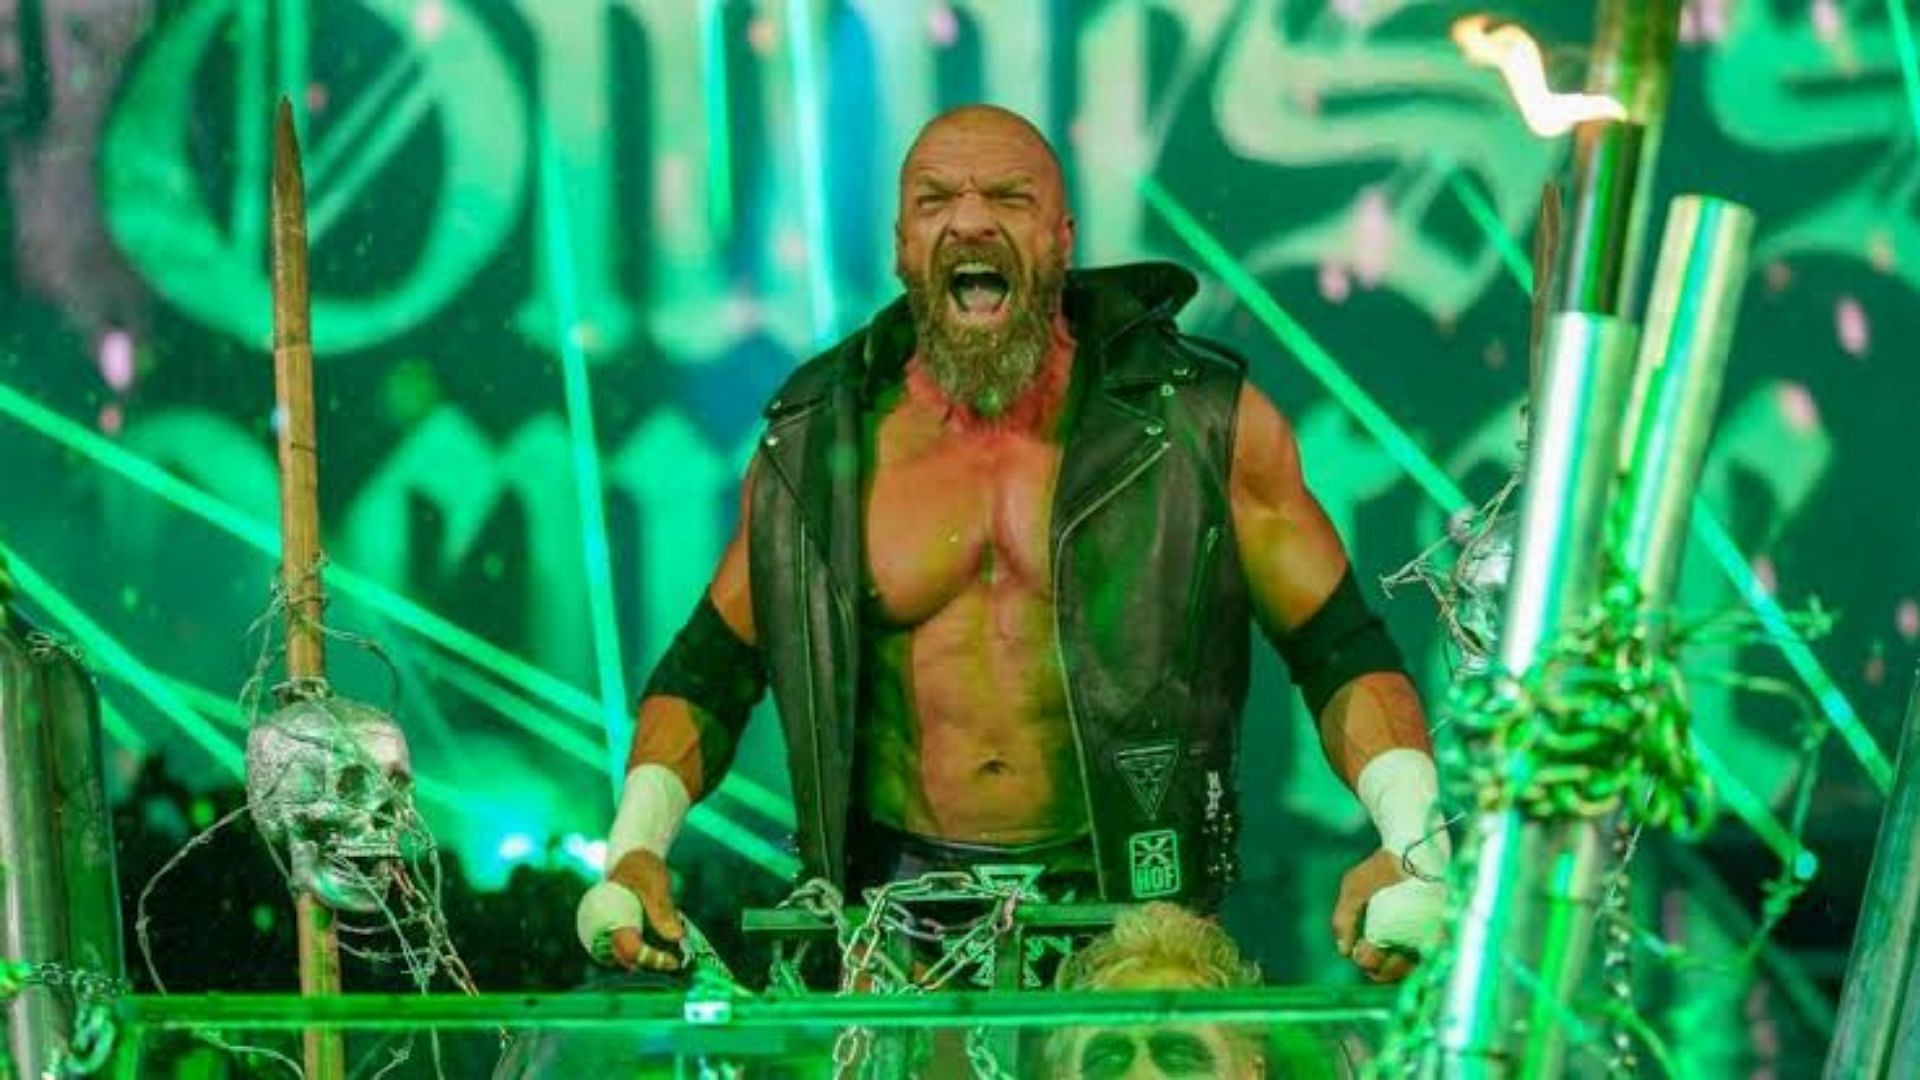 Triple H making his WrestleMania entrance